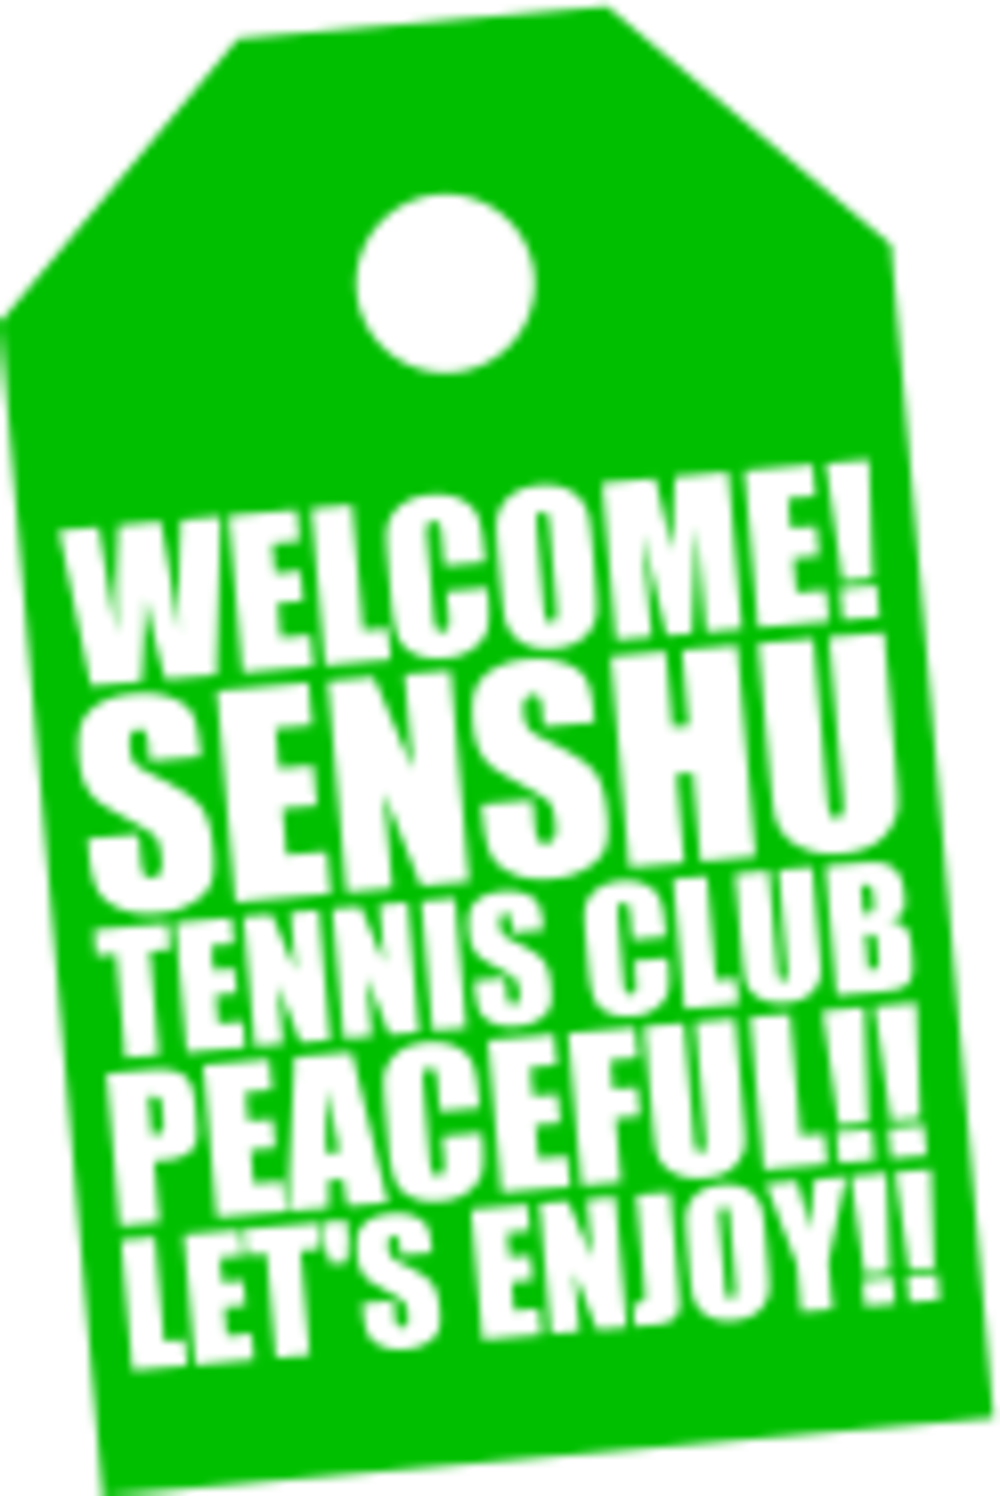 Senshu Tennis Club Peaceful ！！